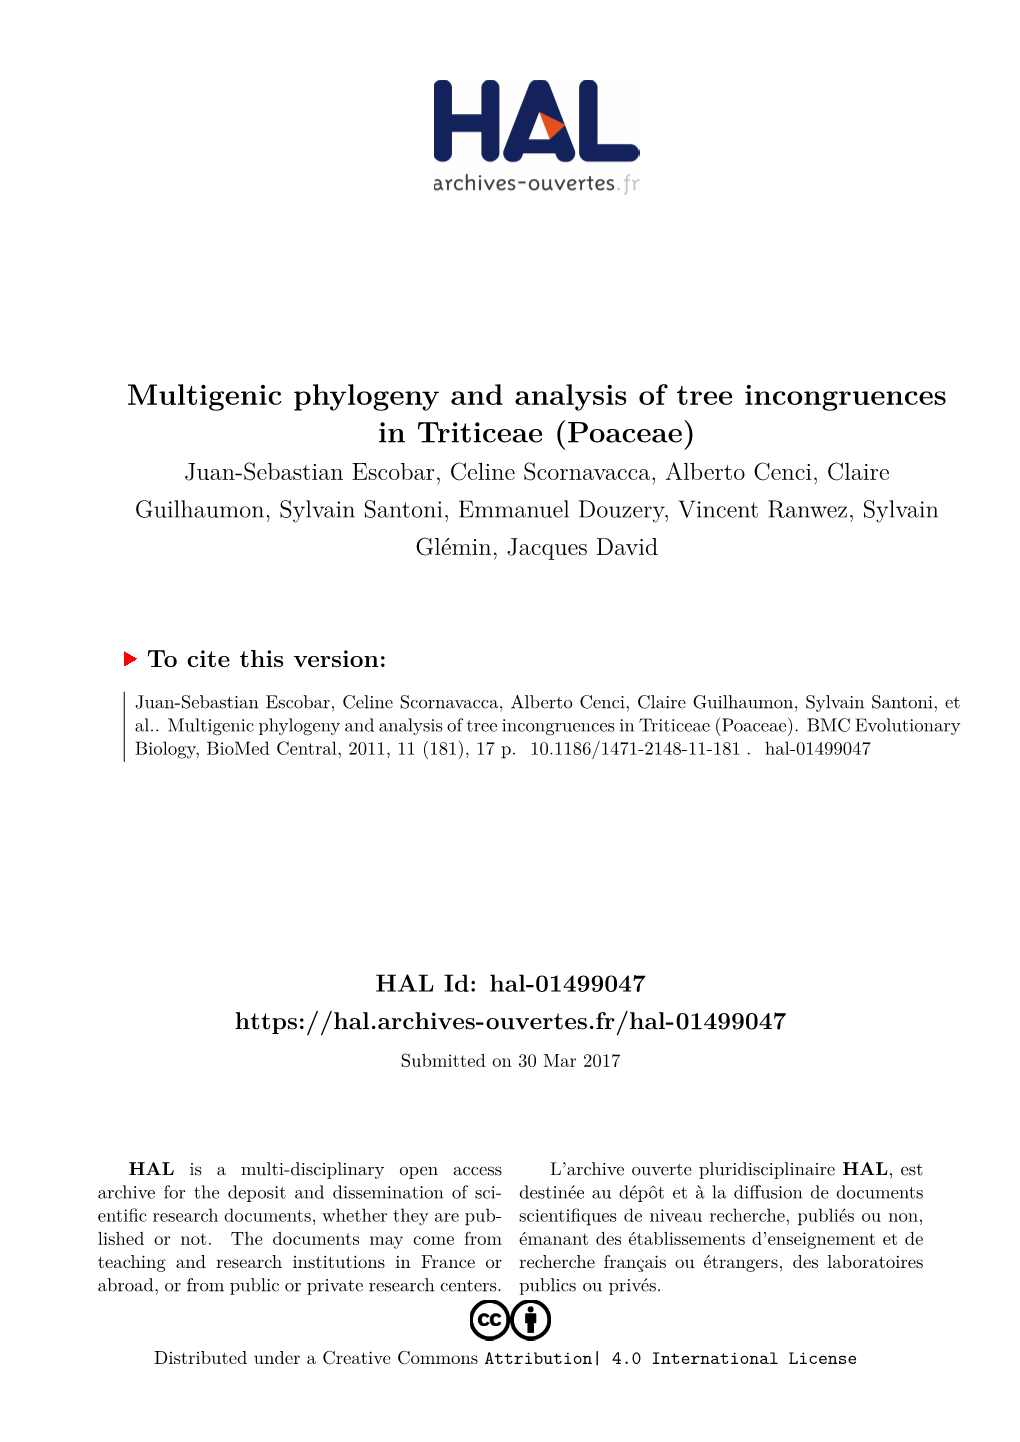 Multigenic Phylogeny and Analysis of Tree